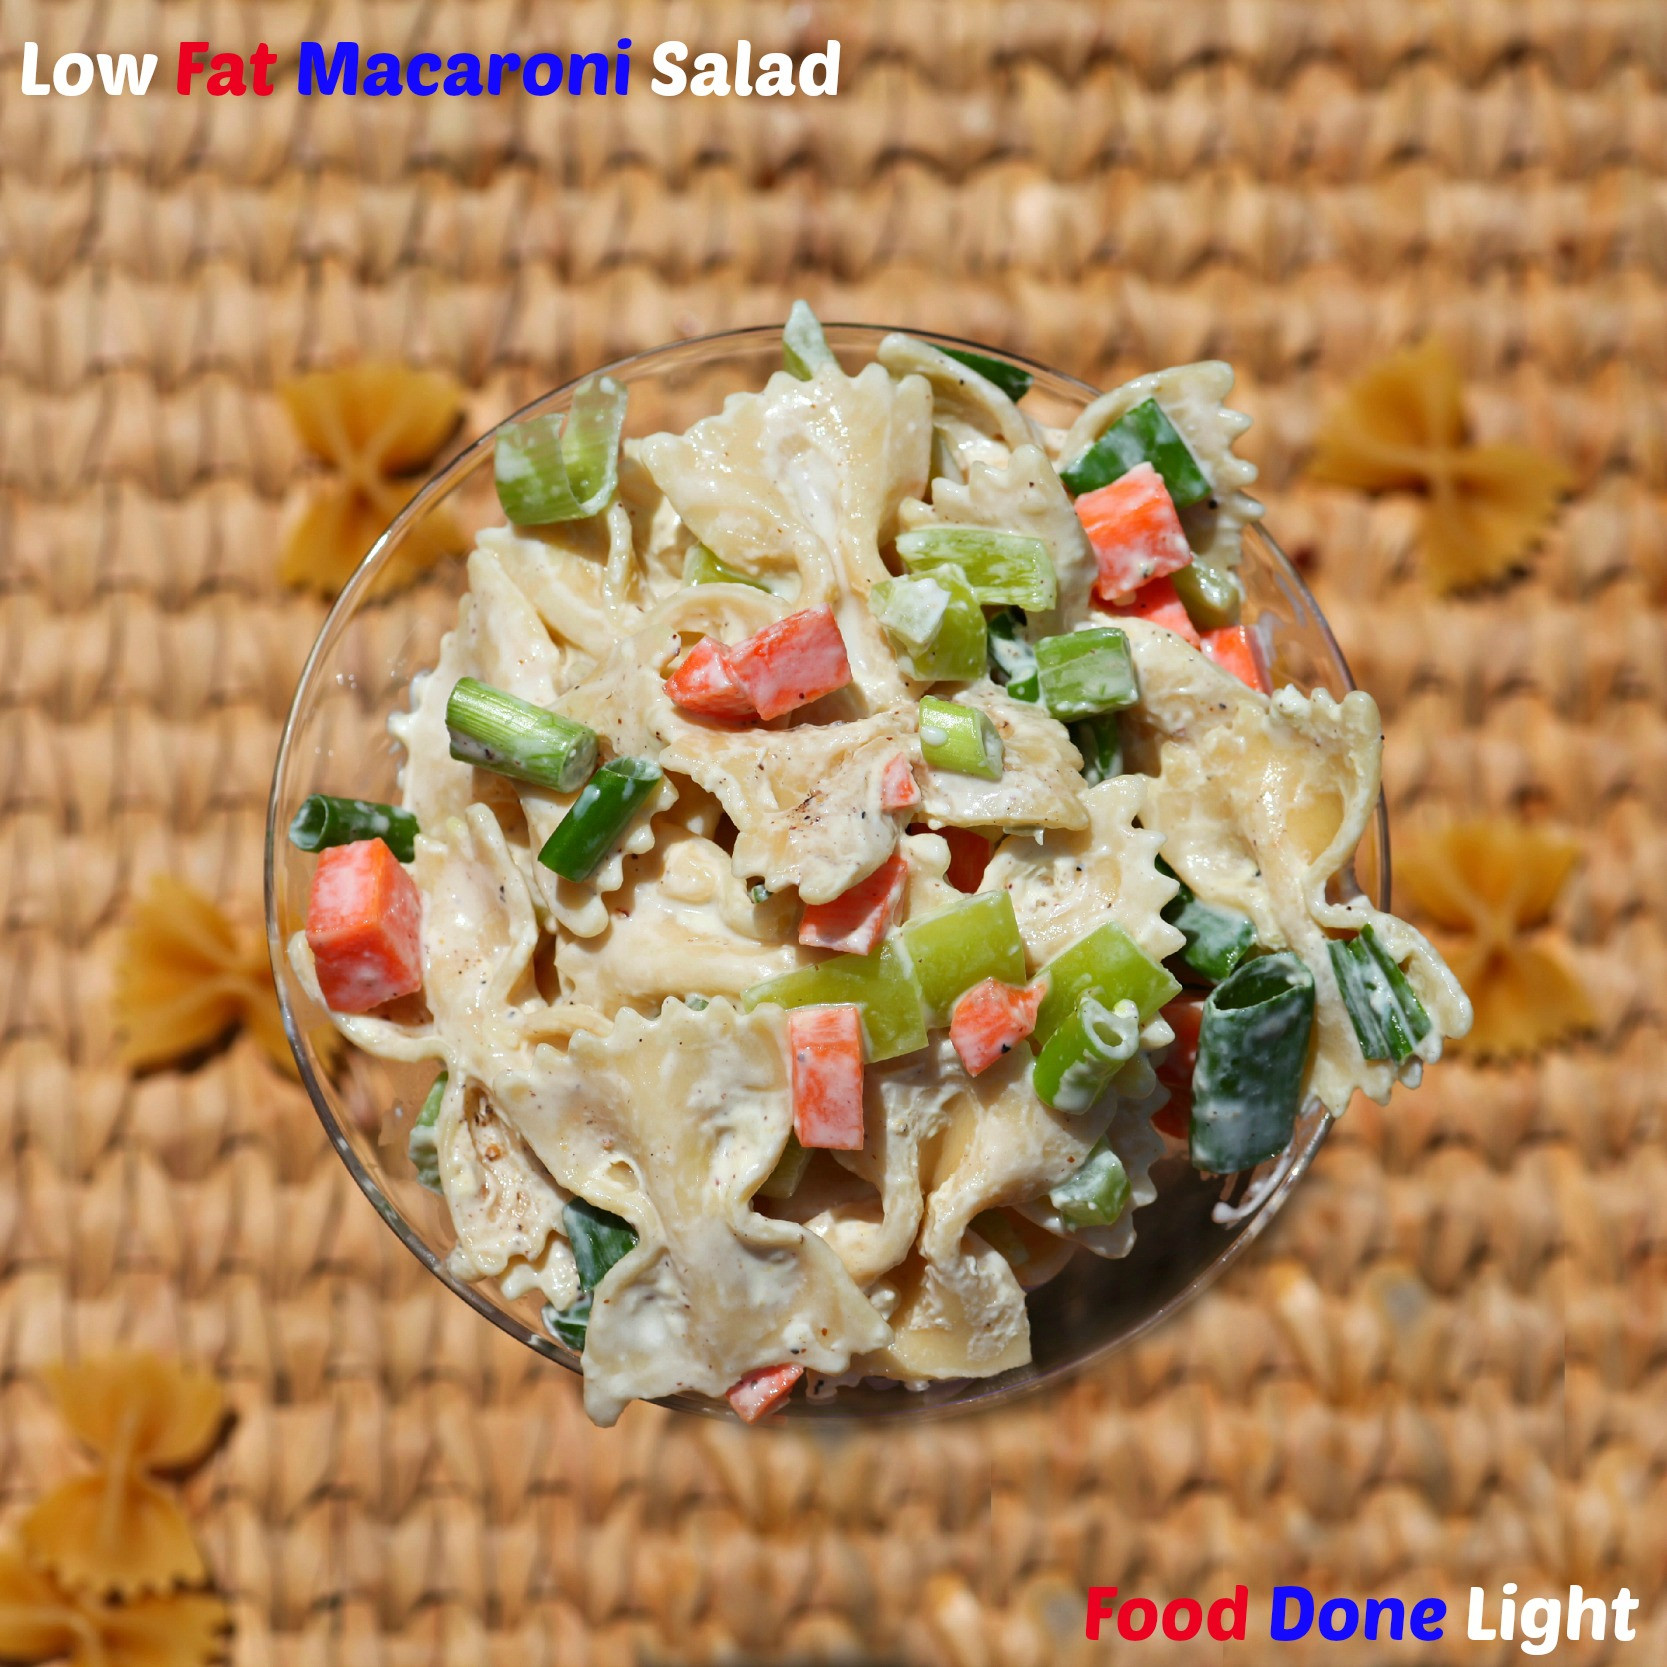 Low Fat Pasta Salad
 Low Fat Macaroni Salad Healthy Low Calorie Food Done